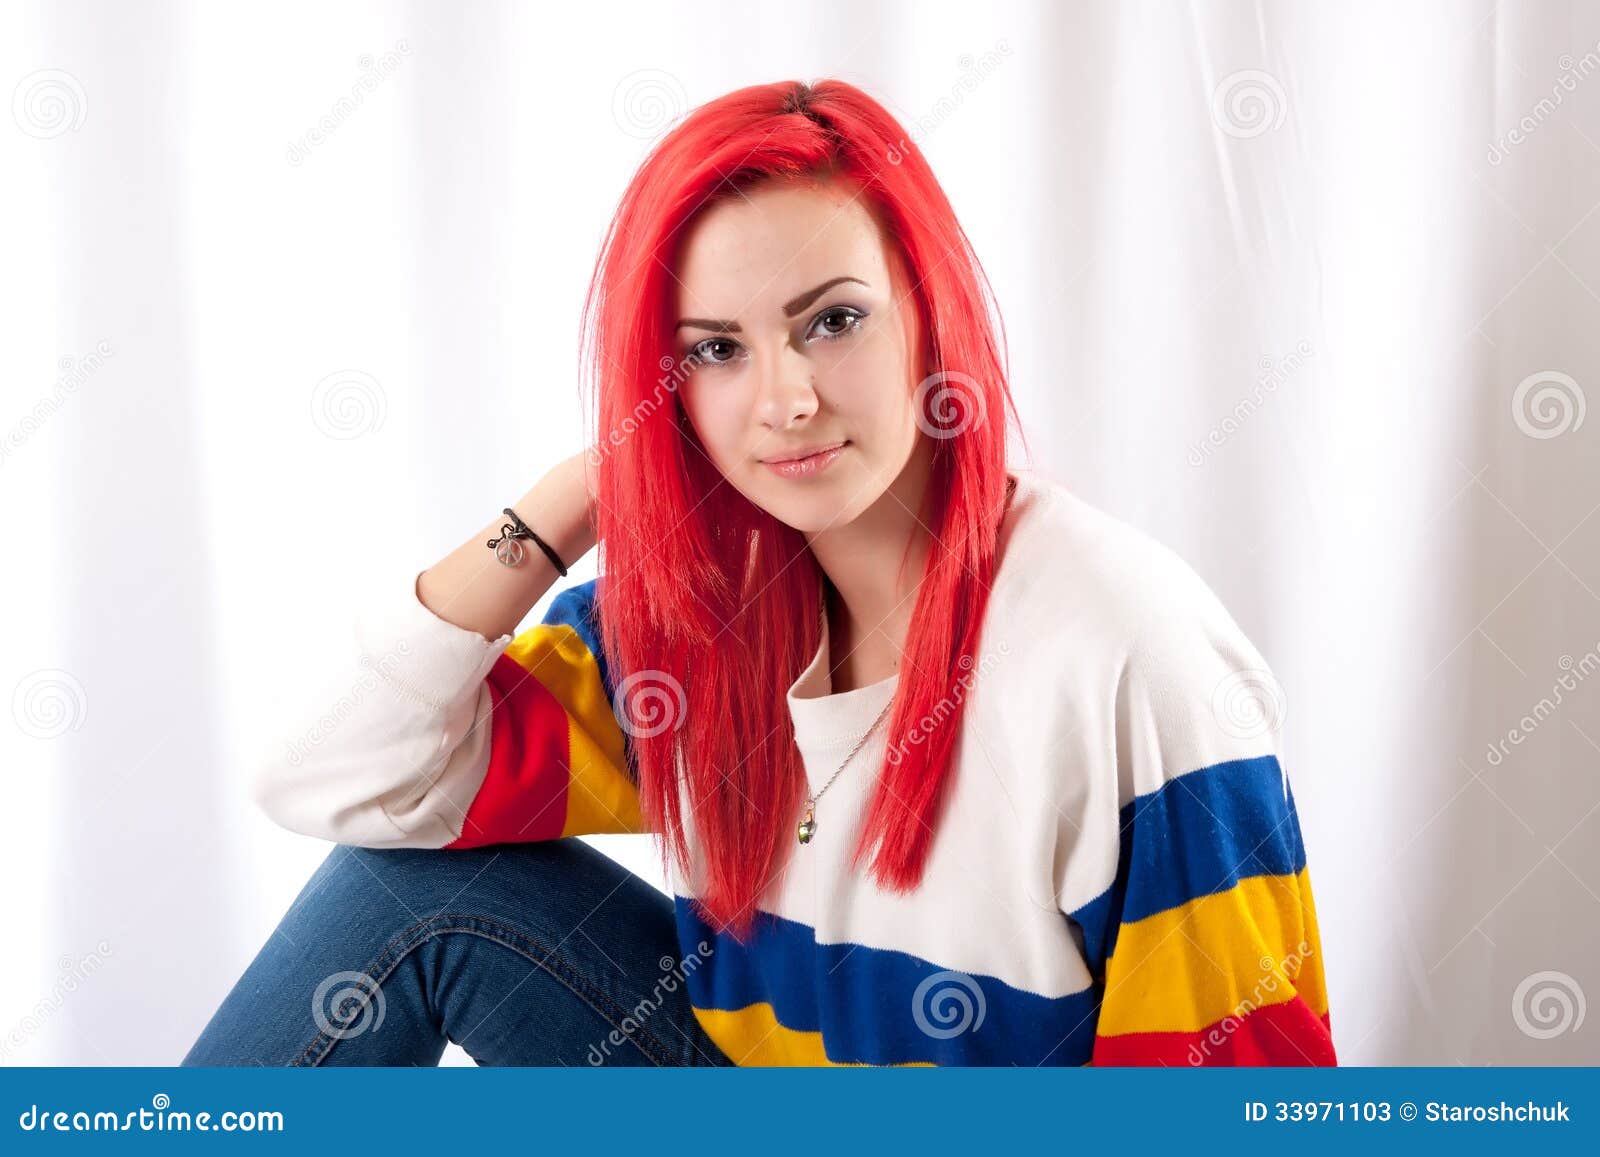 girl glowing red hair free photo